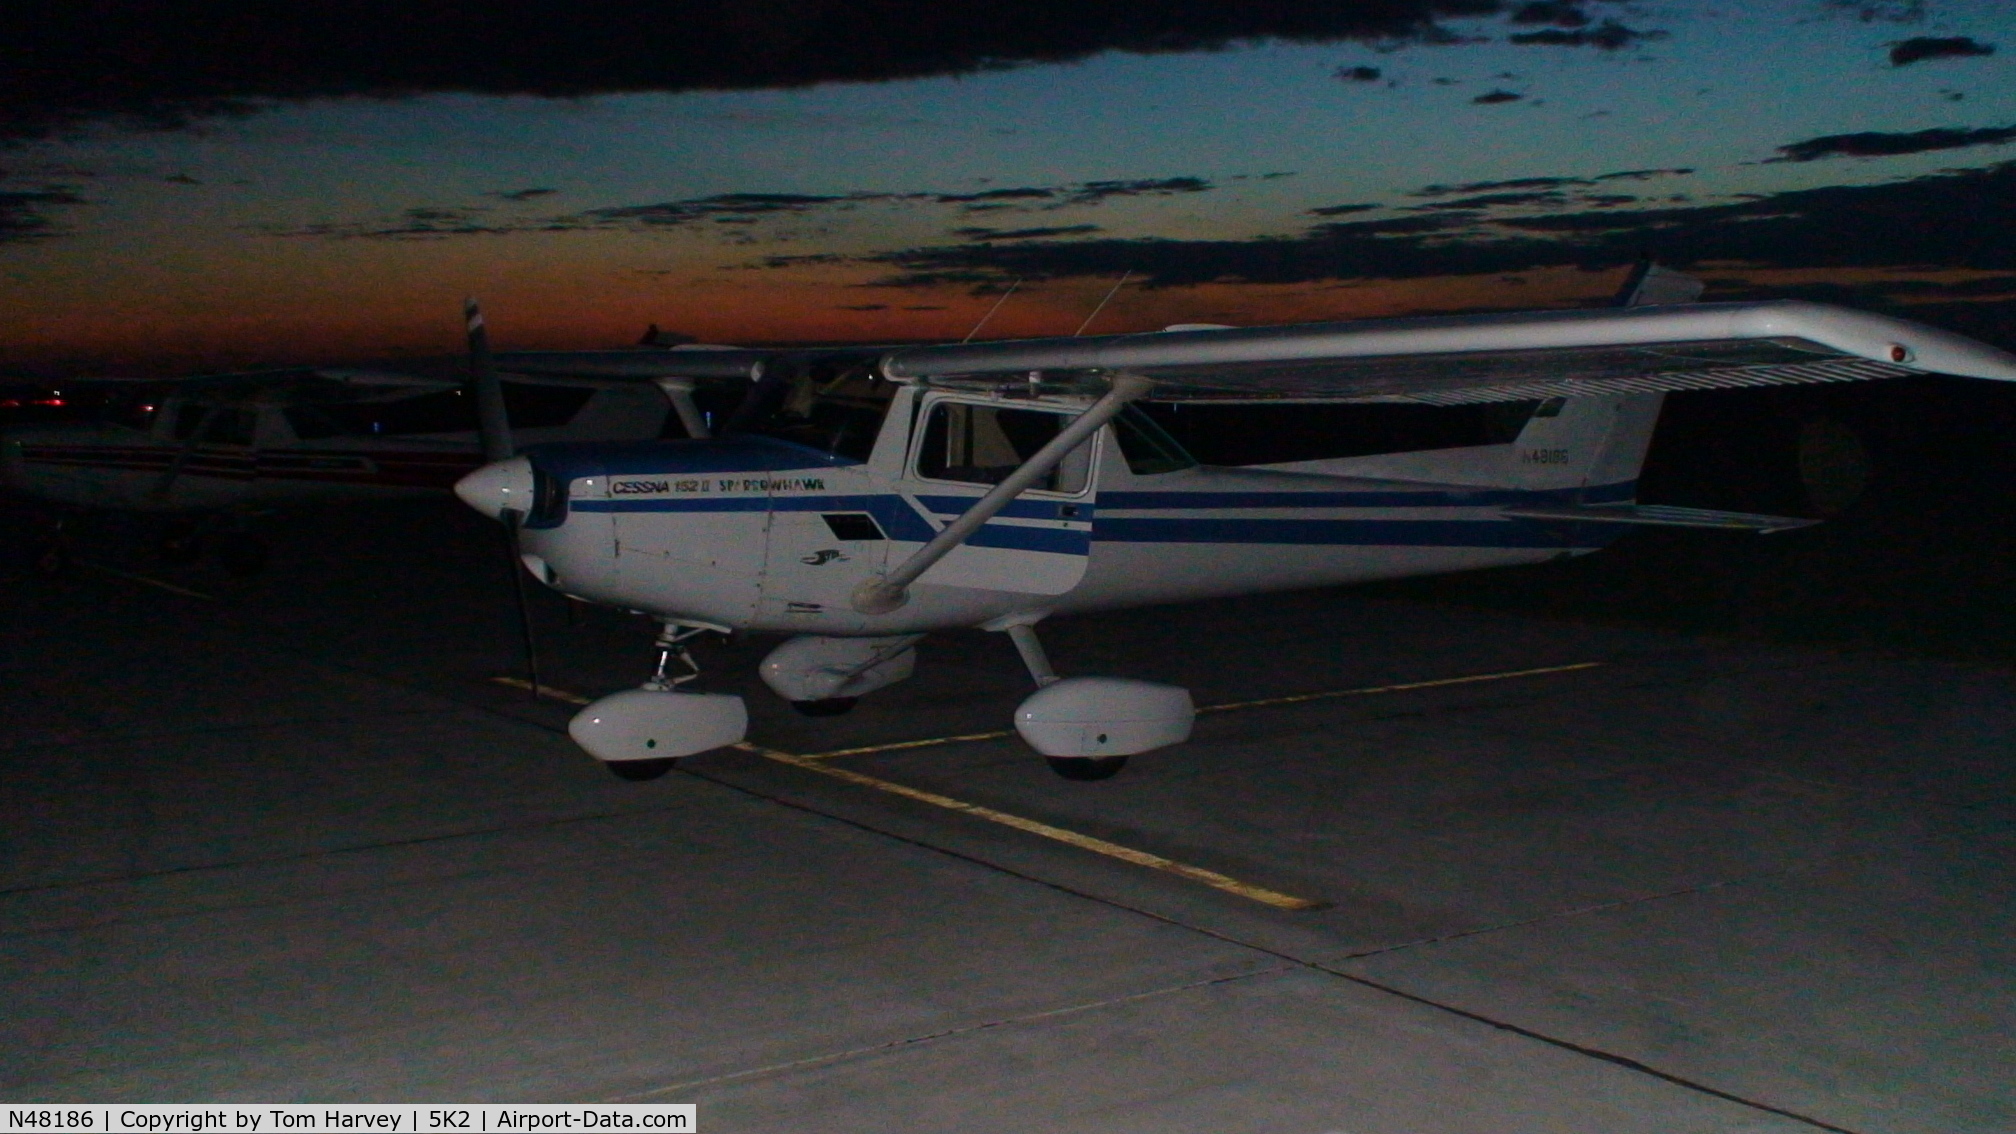 N48186, 1979 Cessna 152 C/N 15283298, Taken at 4:30a at Tribune, KS